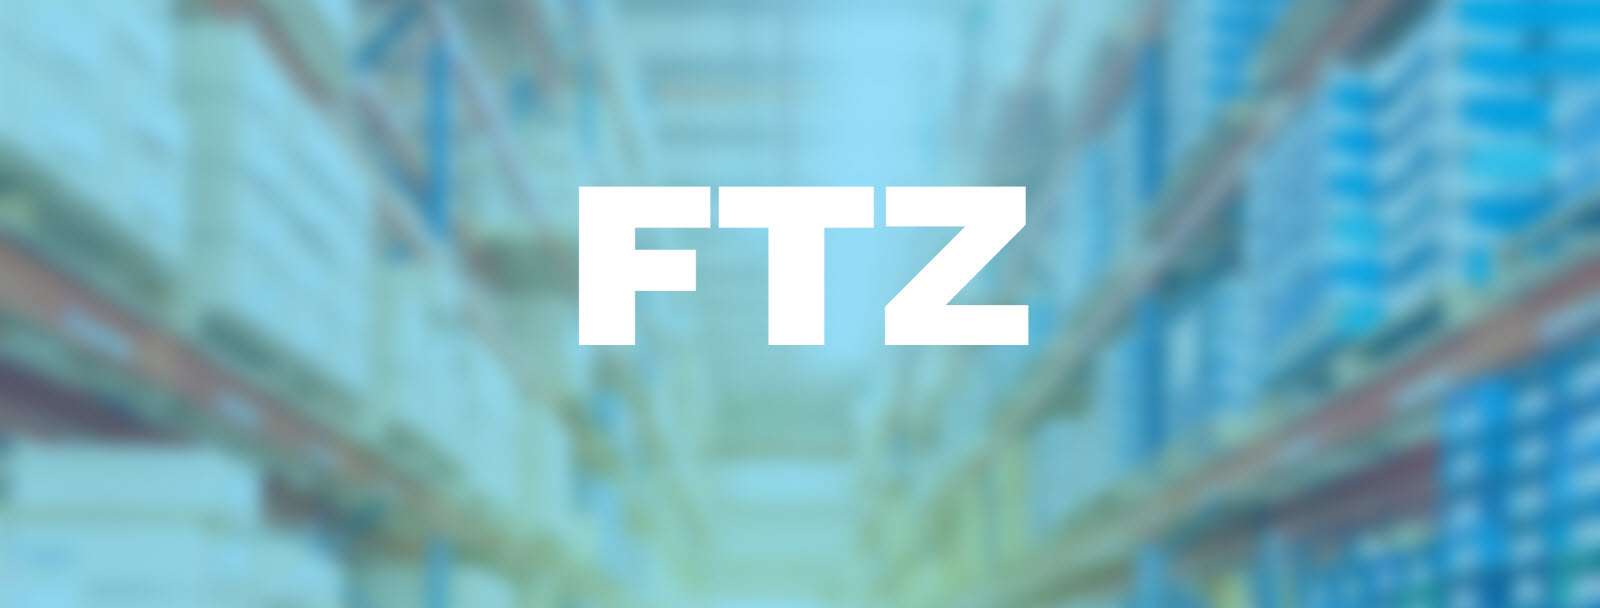 FTZ bonded warehouse china